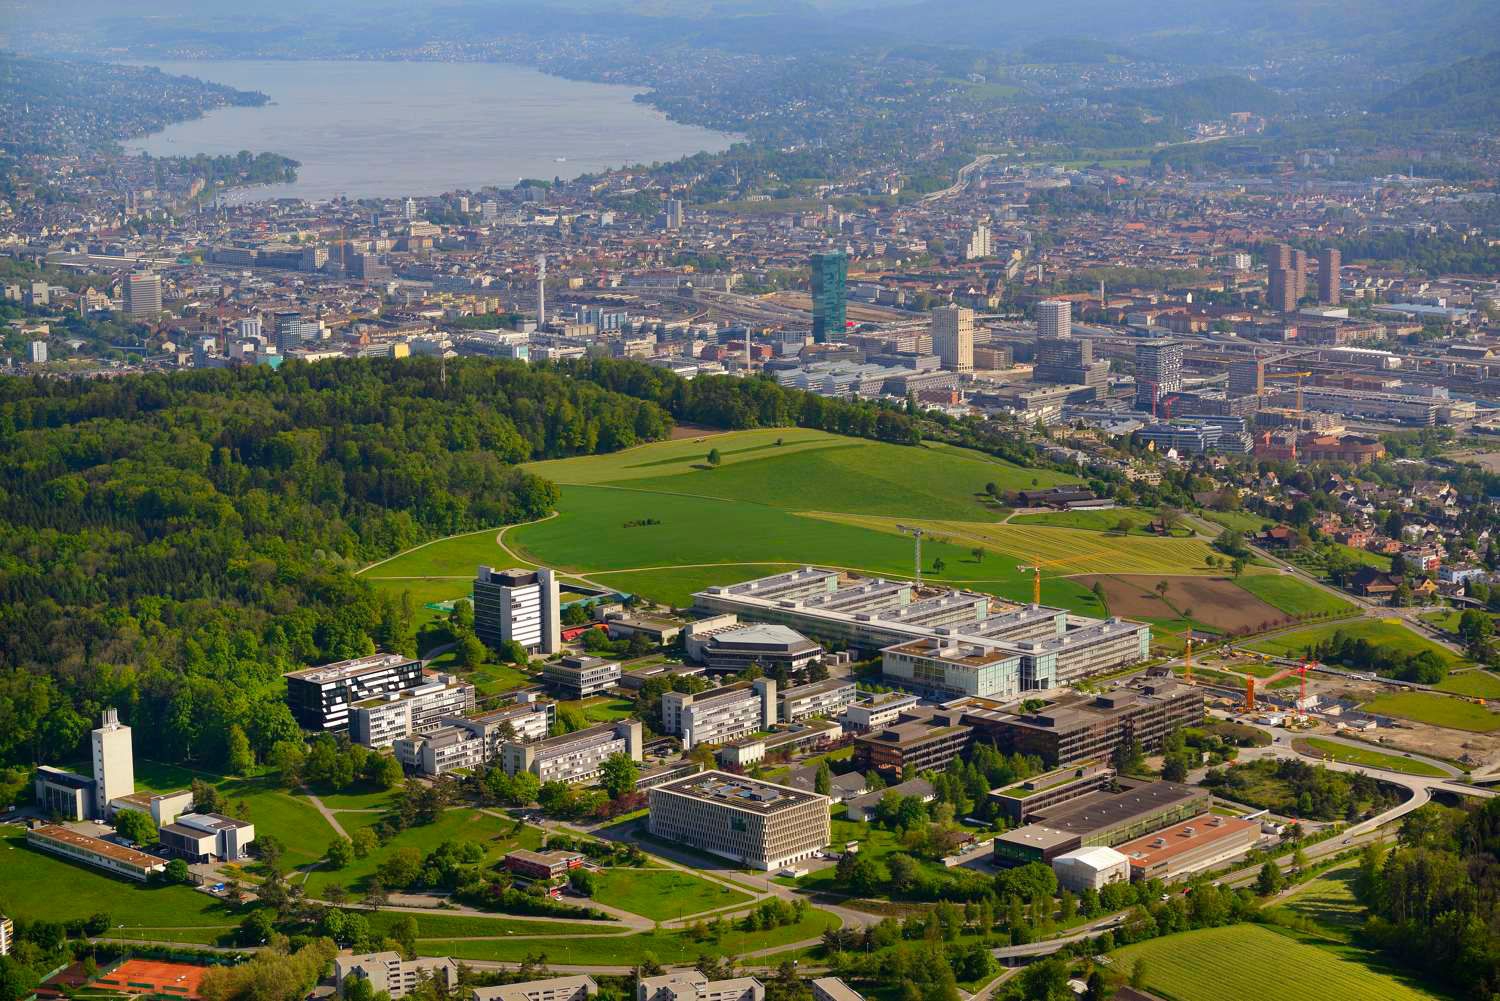 Enlarged view: ETH Zurich Campus Hönggerberg